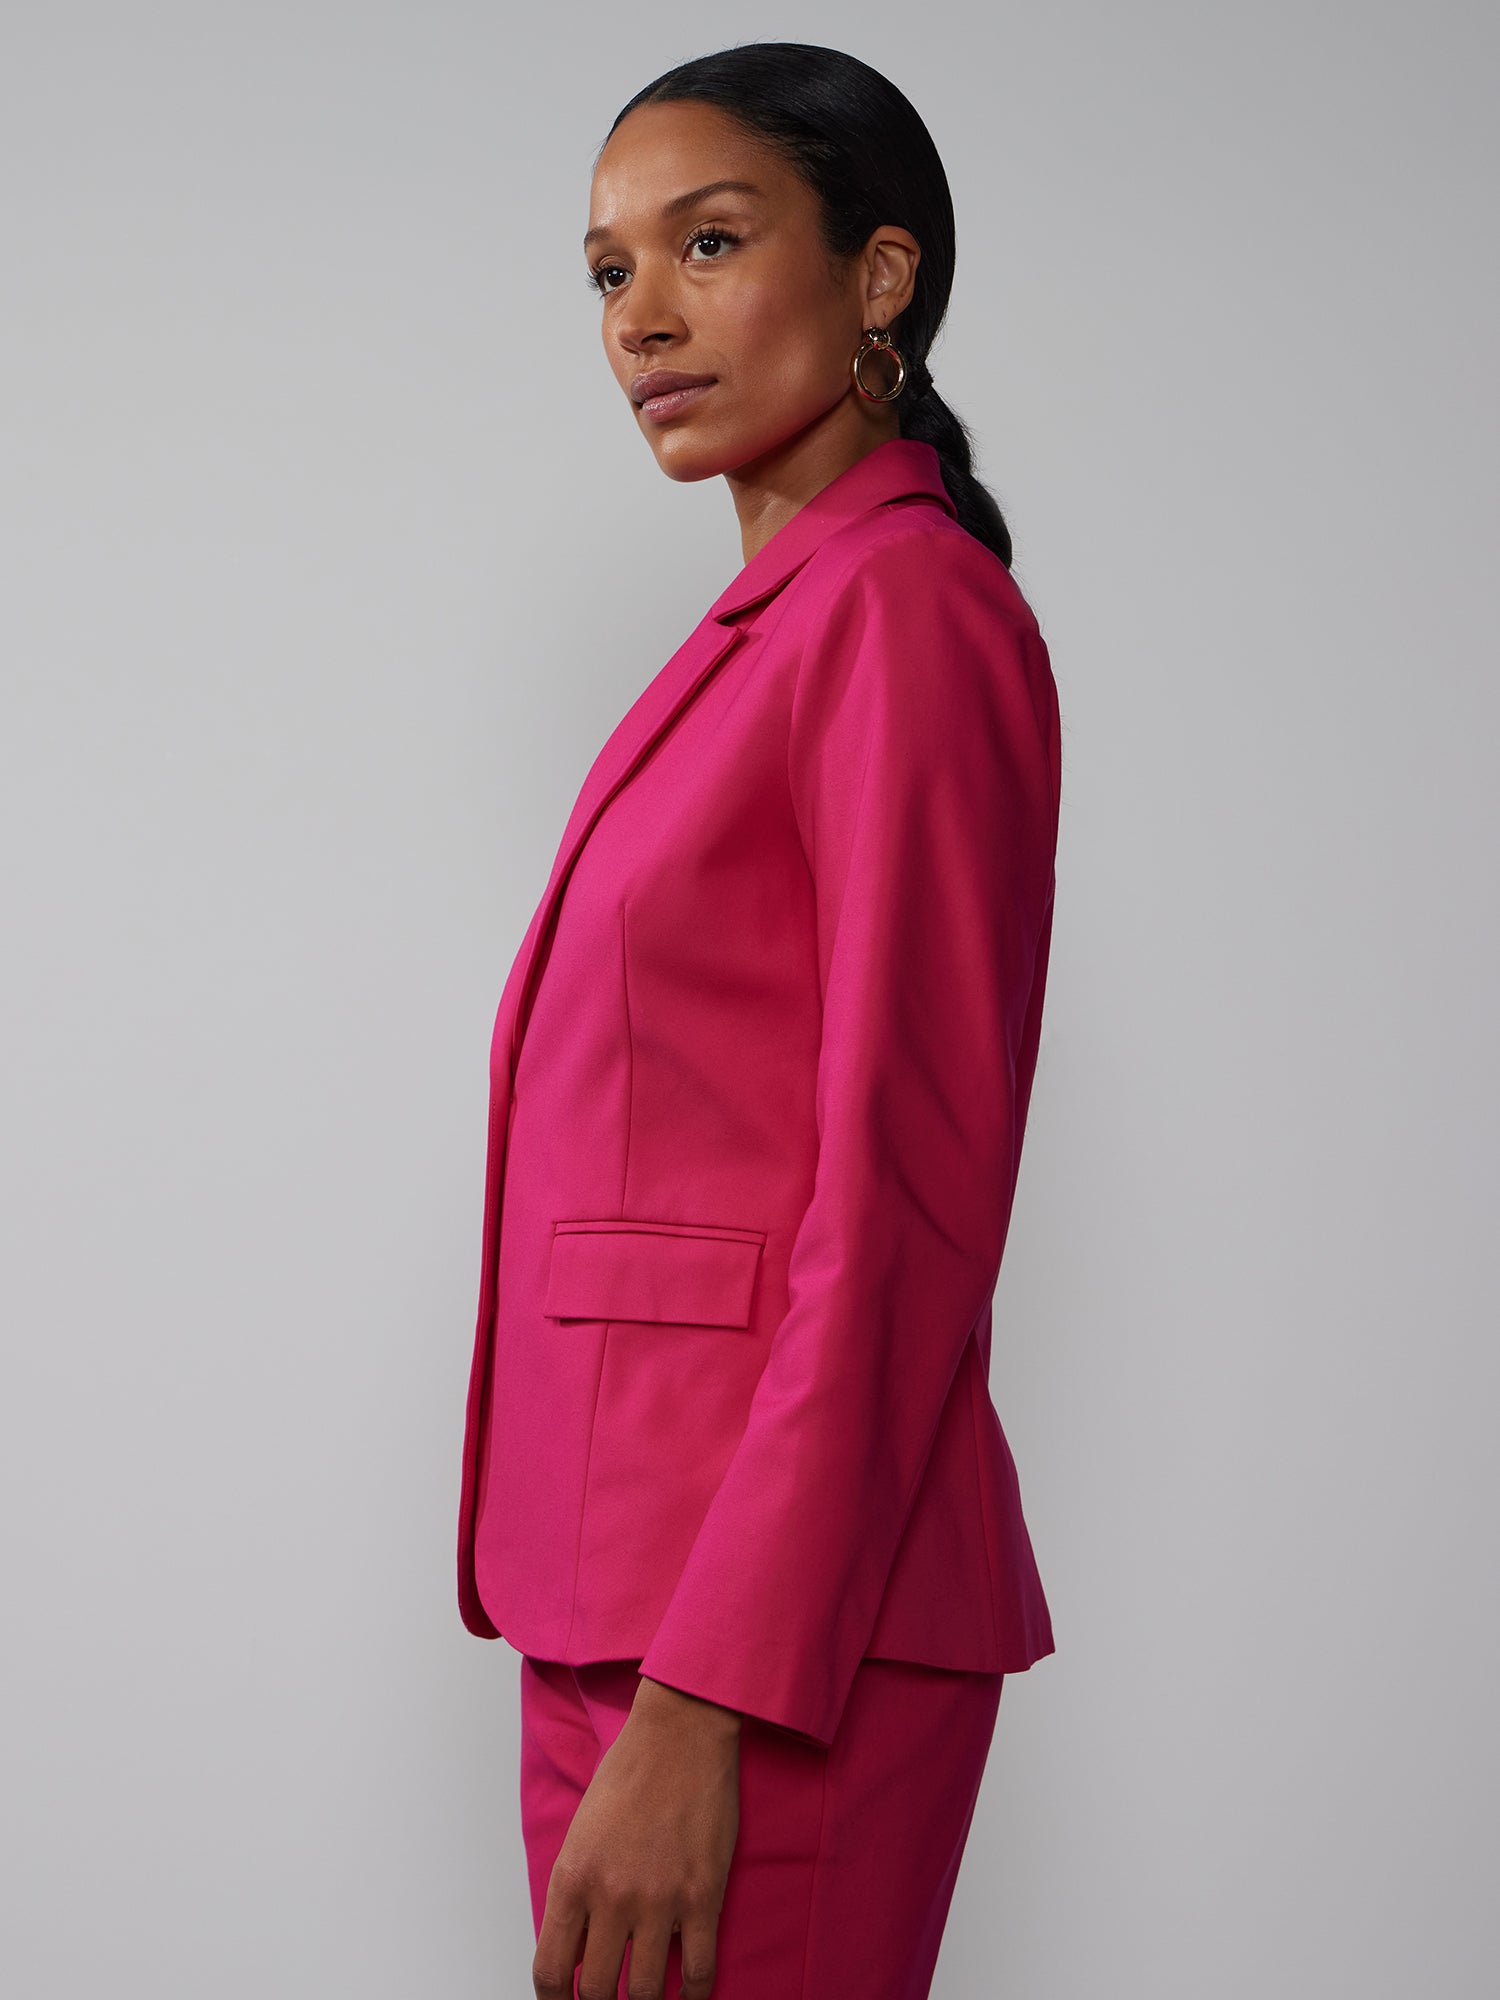 Women's Corporate & Business Suit Set, NY&Co